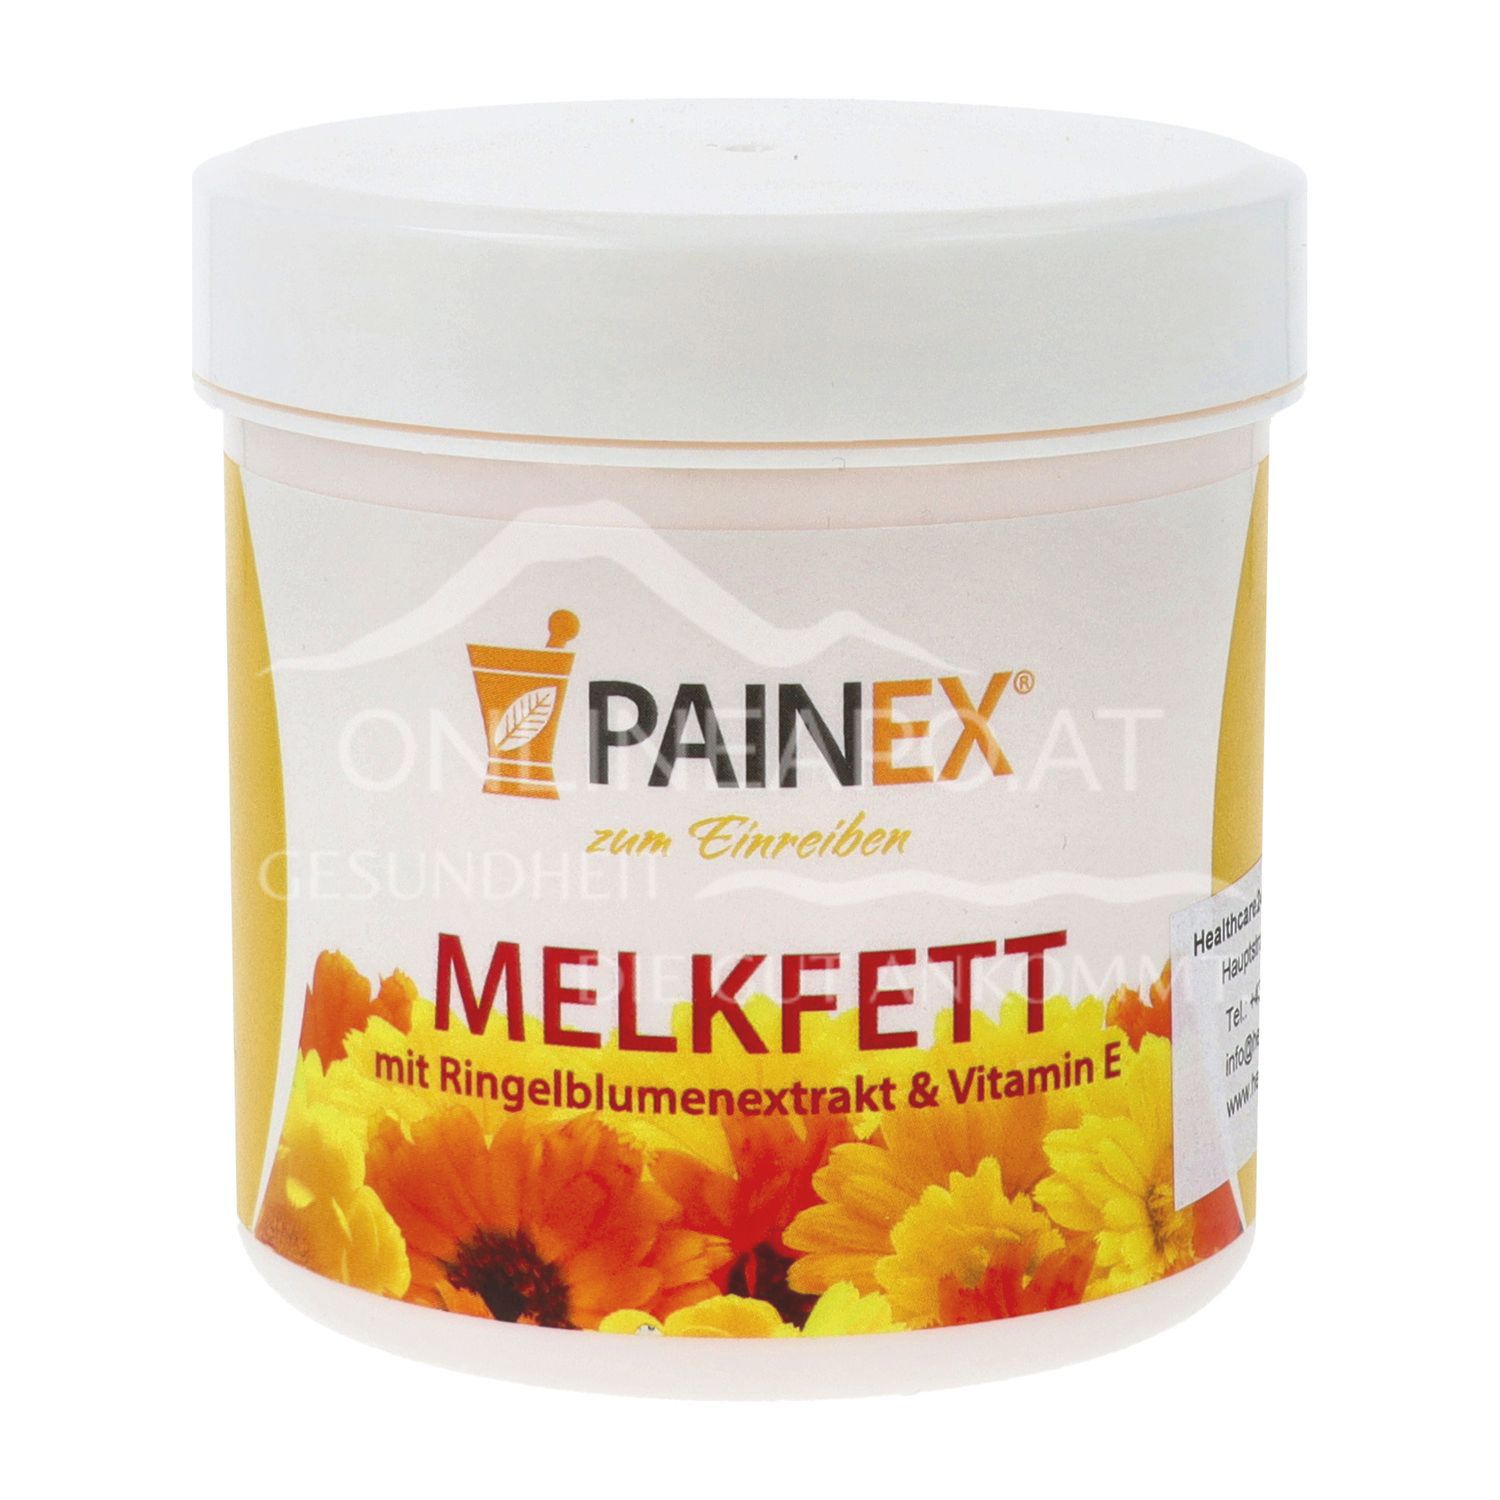 PAINEX® Melkfett mit Ringelblumenextrakt und Vitamin E